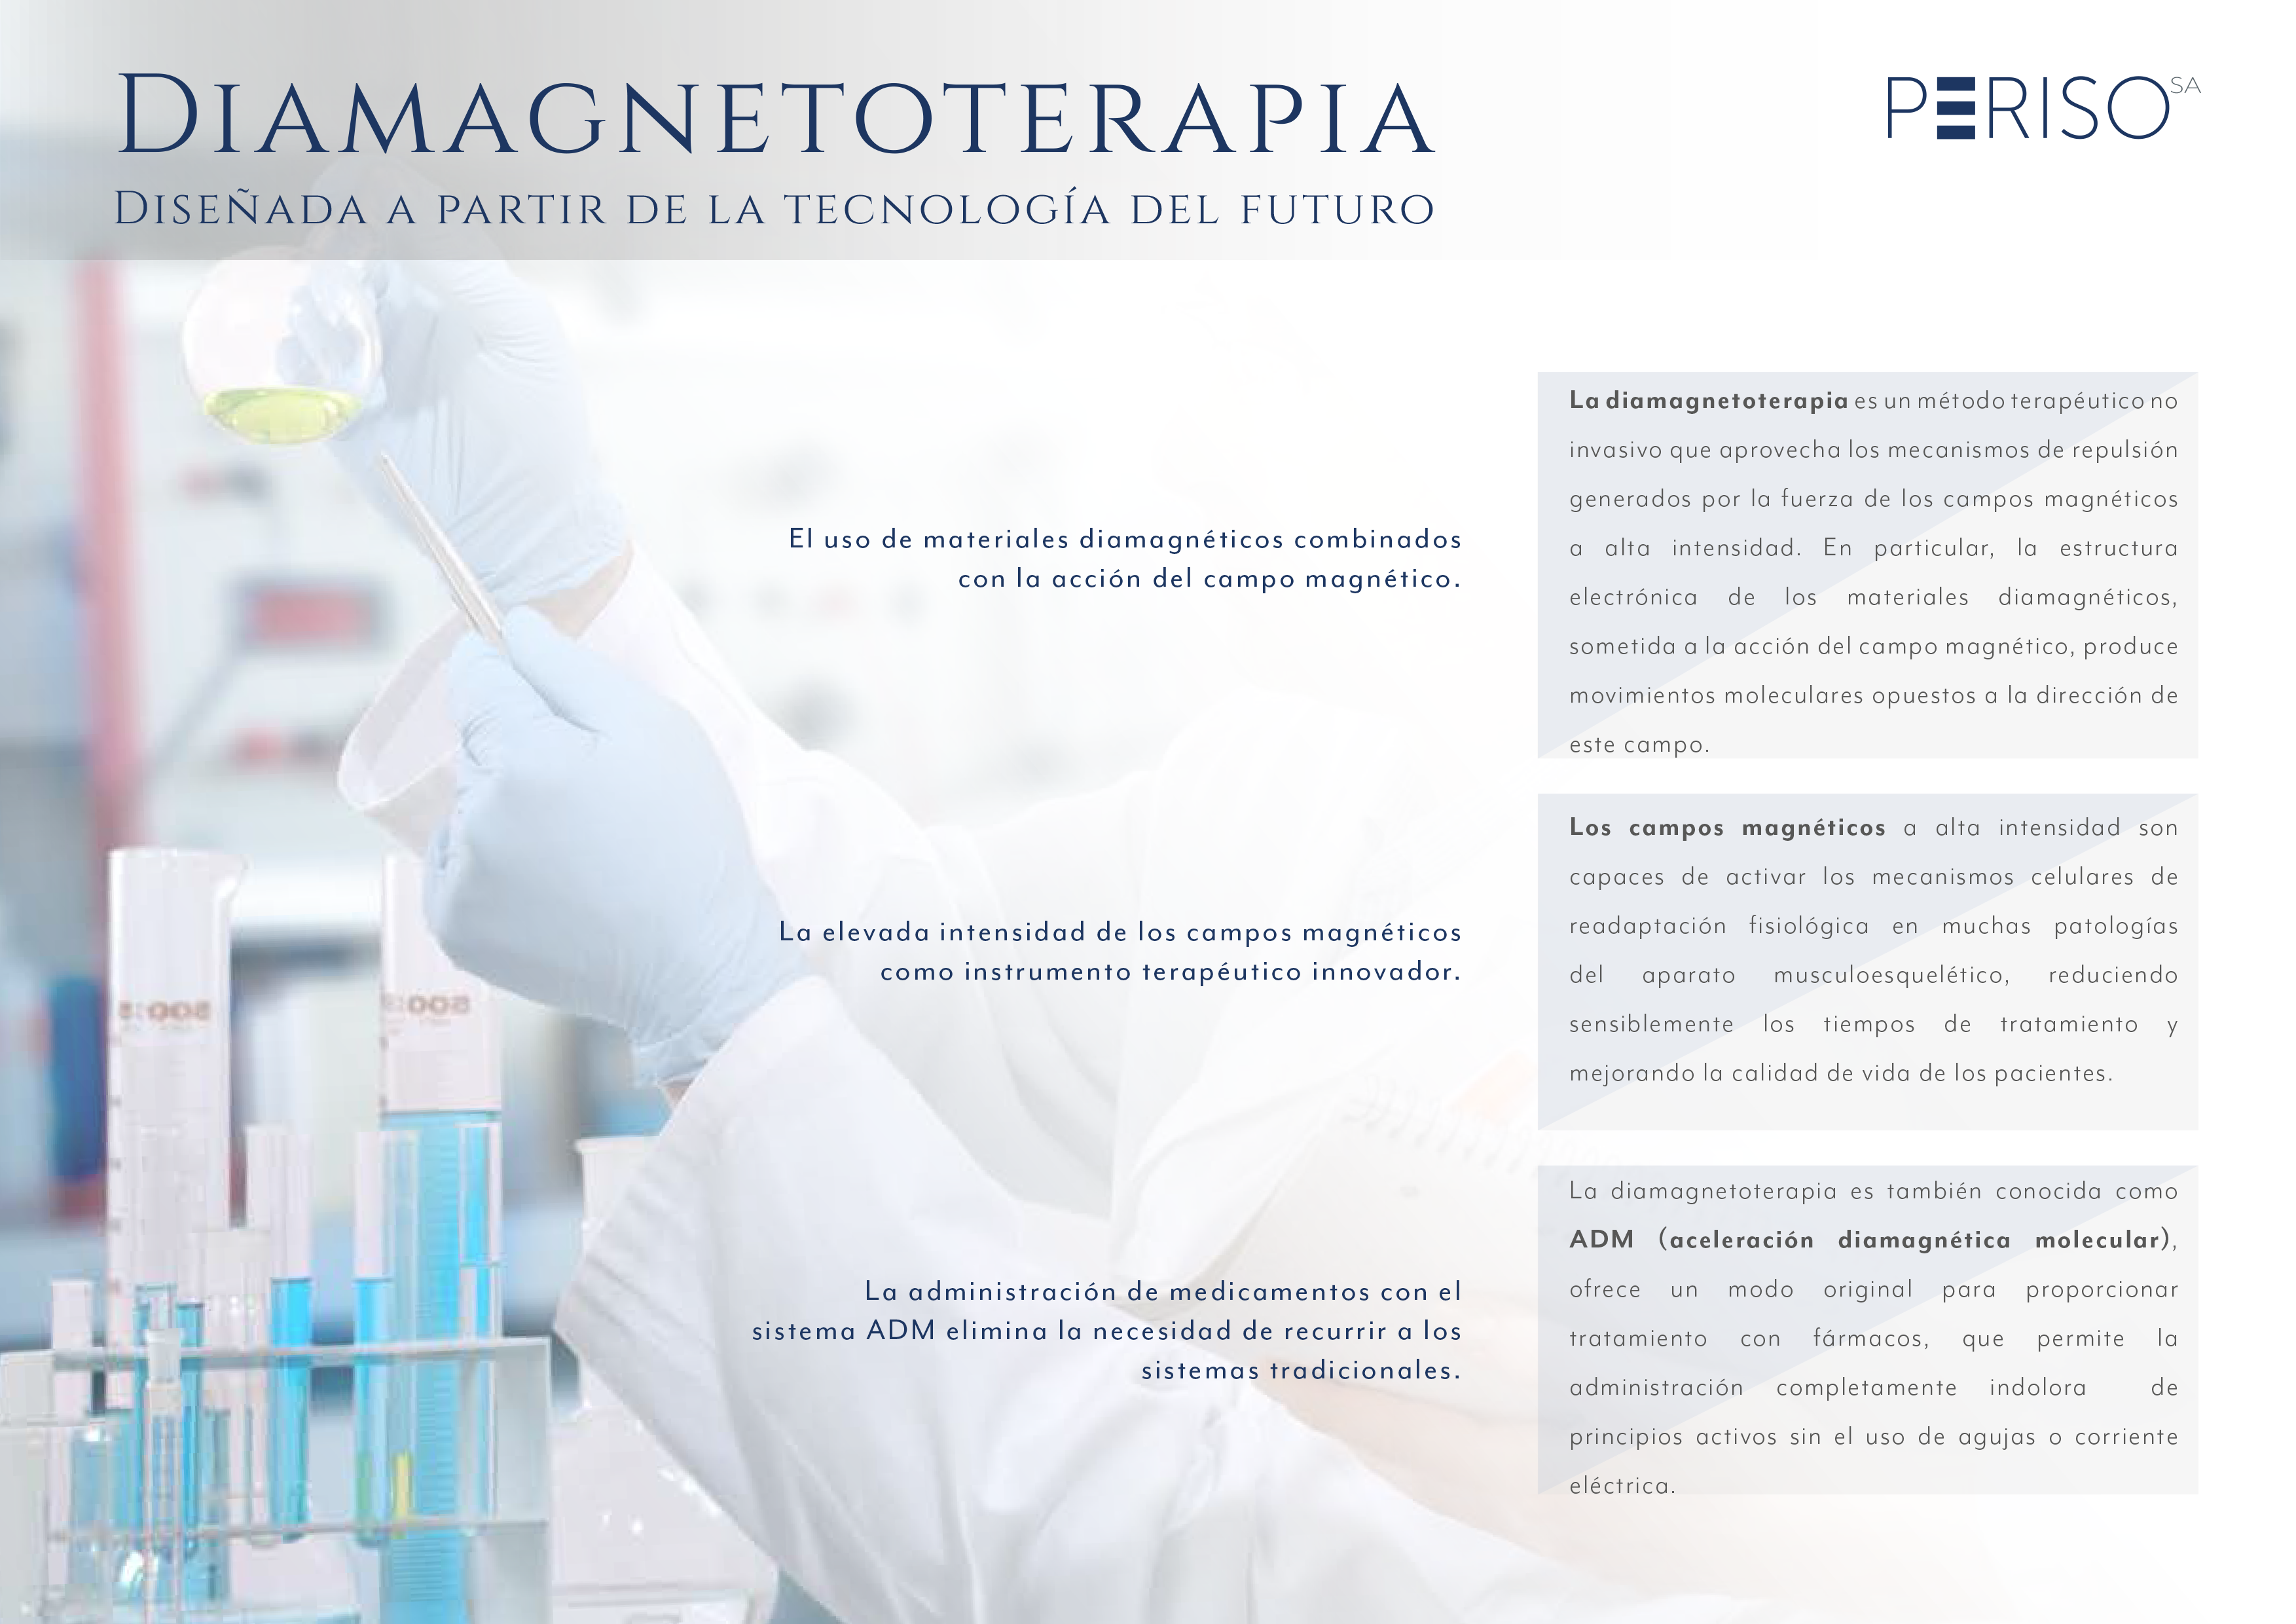 CTU-Mega20 Diamagnetoterapia